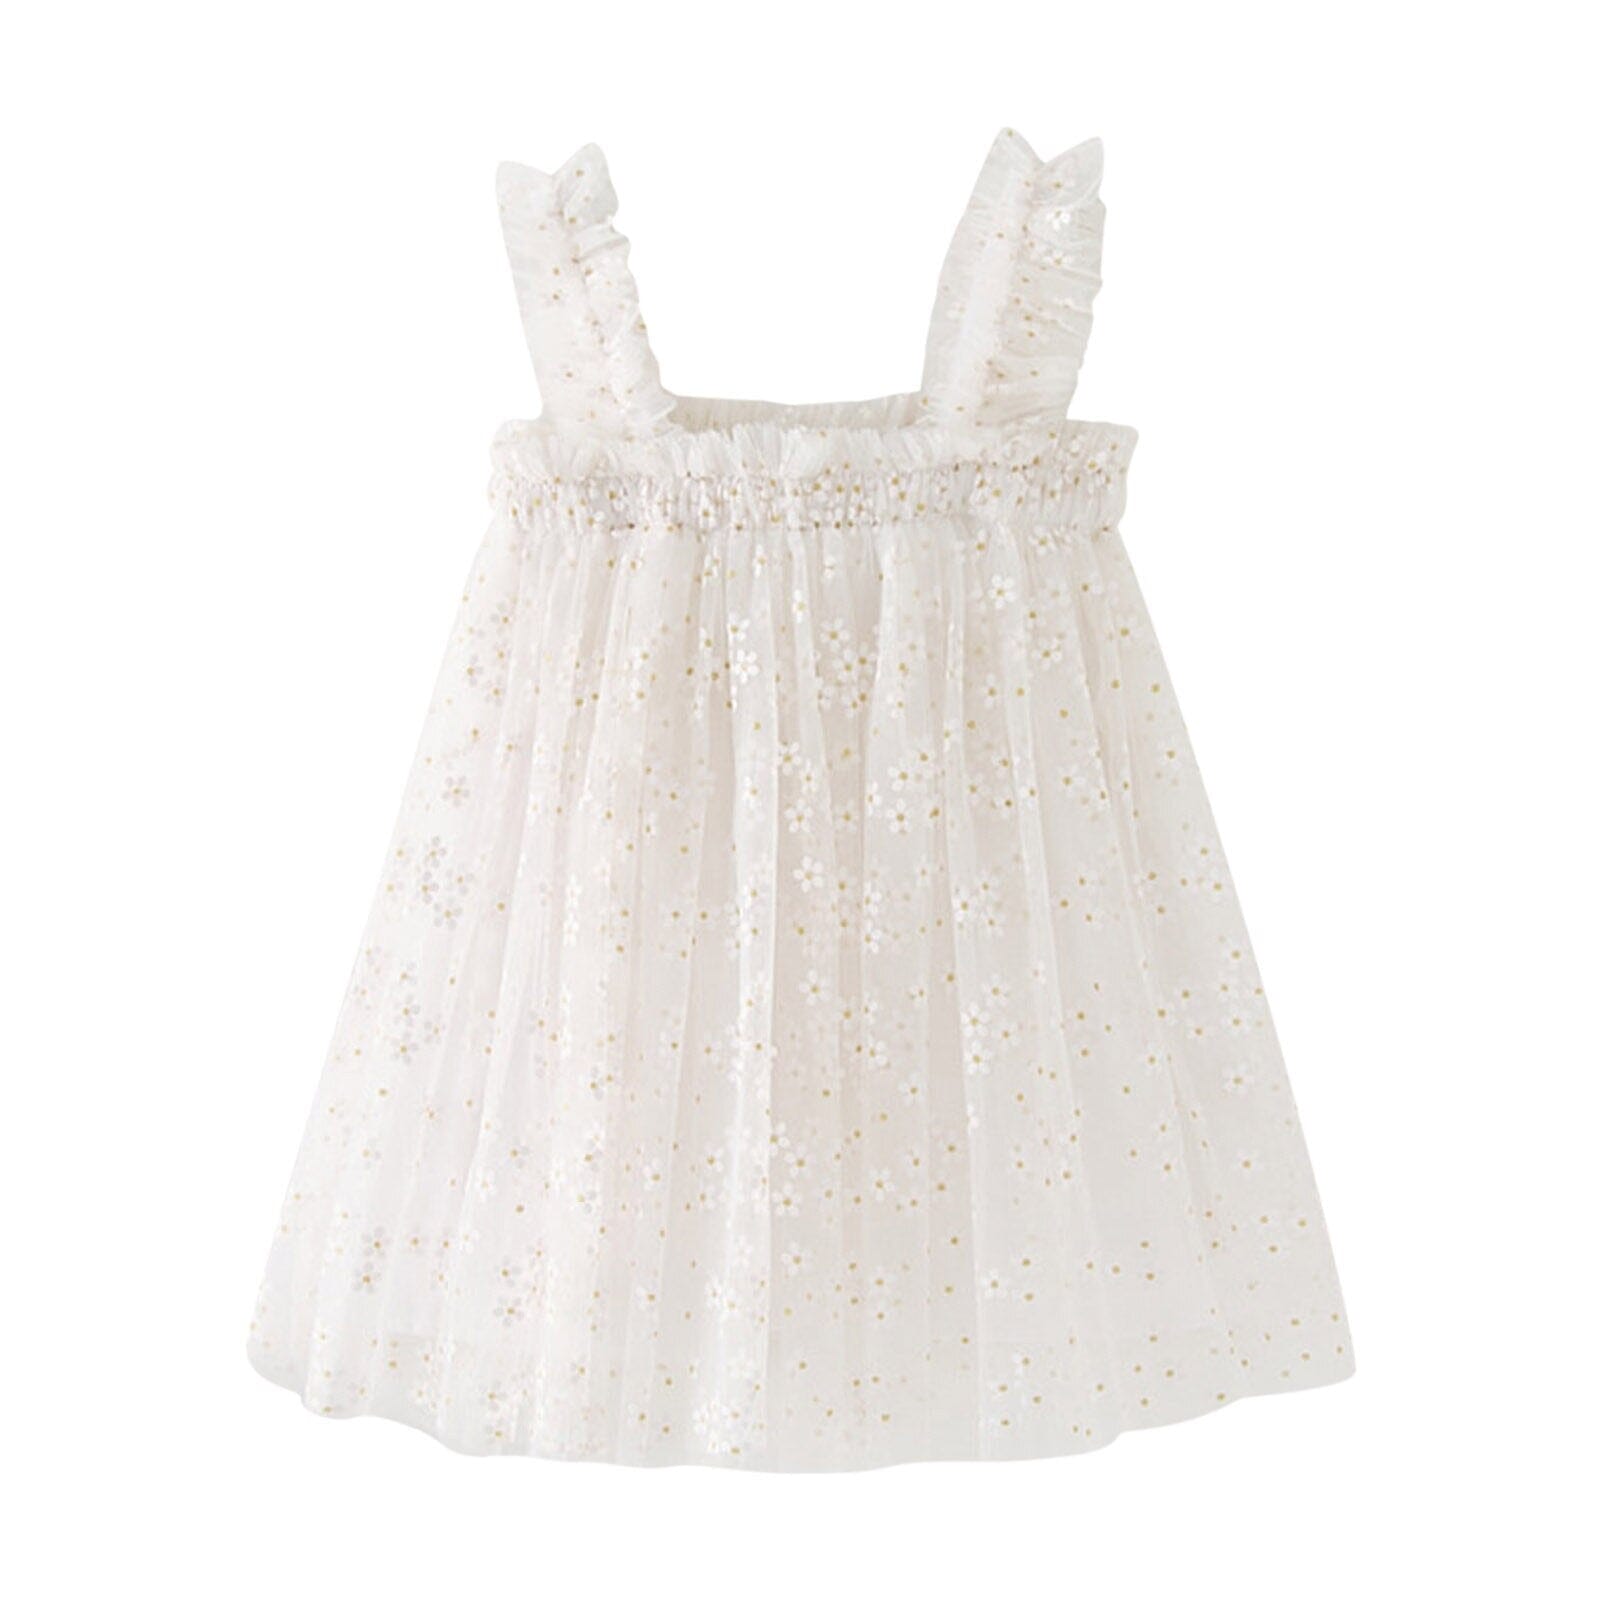 Vestido Infantil Tule Florezinhas Loja Click Certo Branco 12-18 Meses 